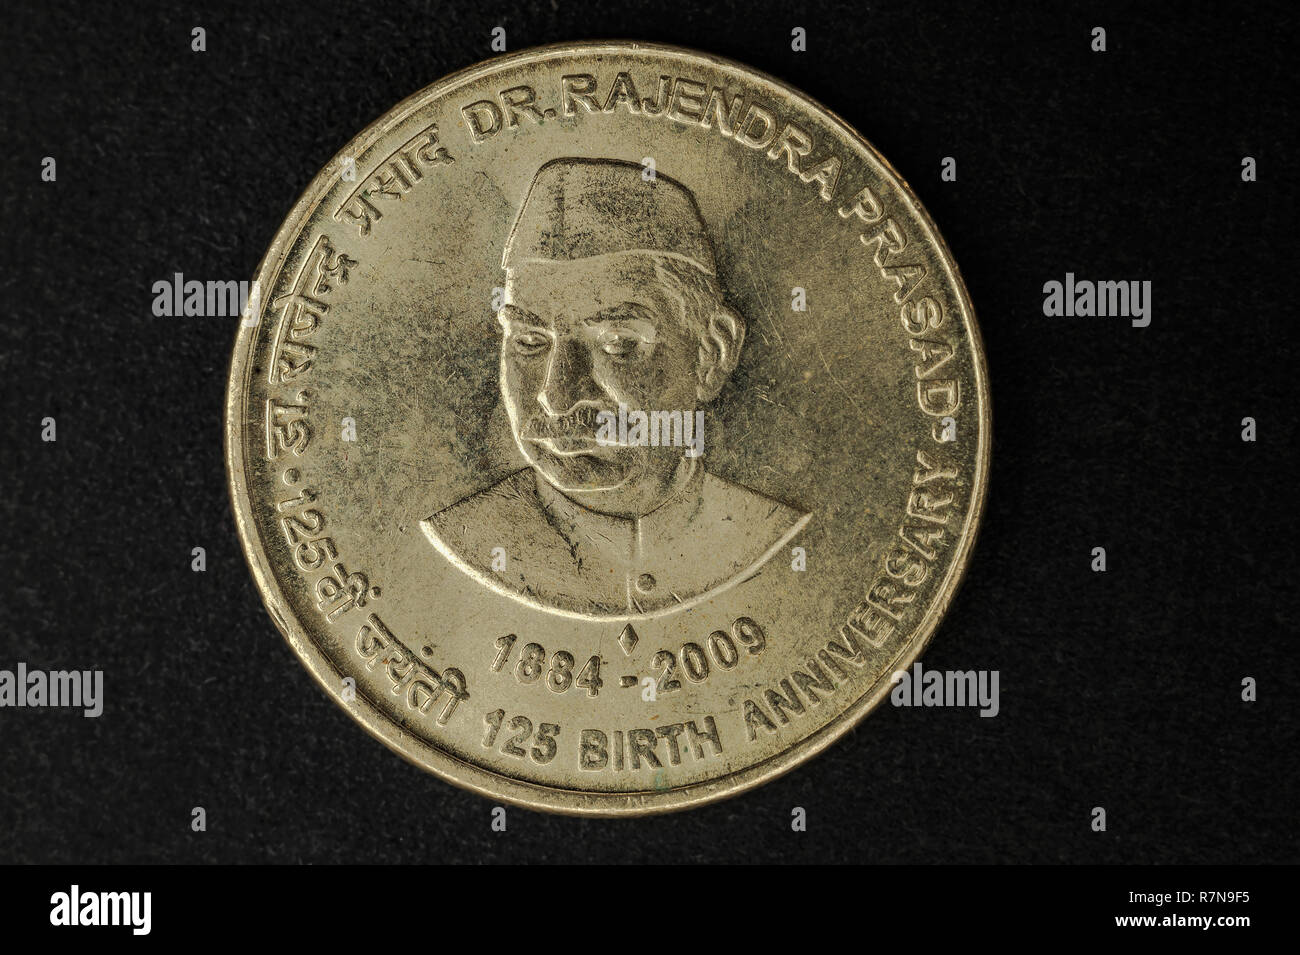 04-Oct-2015-5rupees coin 125 BIRTH ANNIVERSAY DR.Rajendra Prasad-INDIA asia Stock Photo